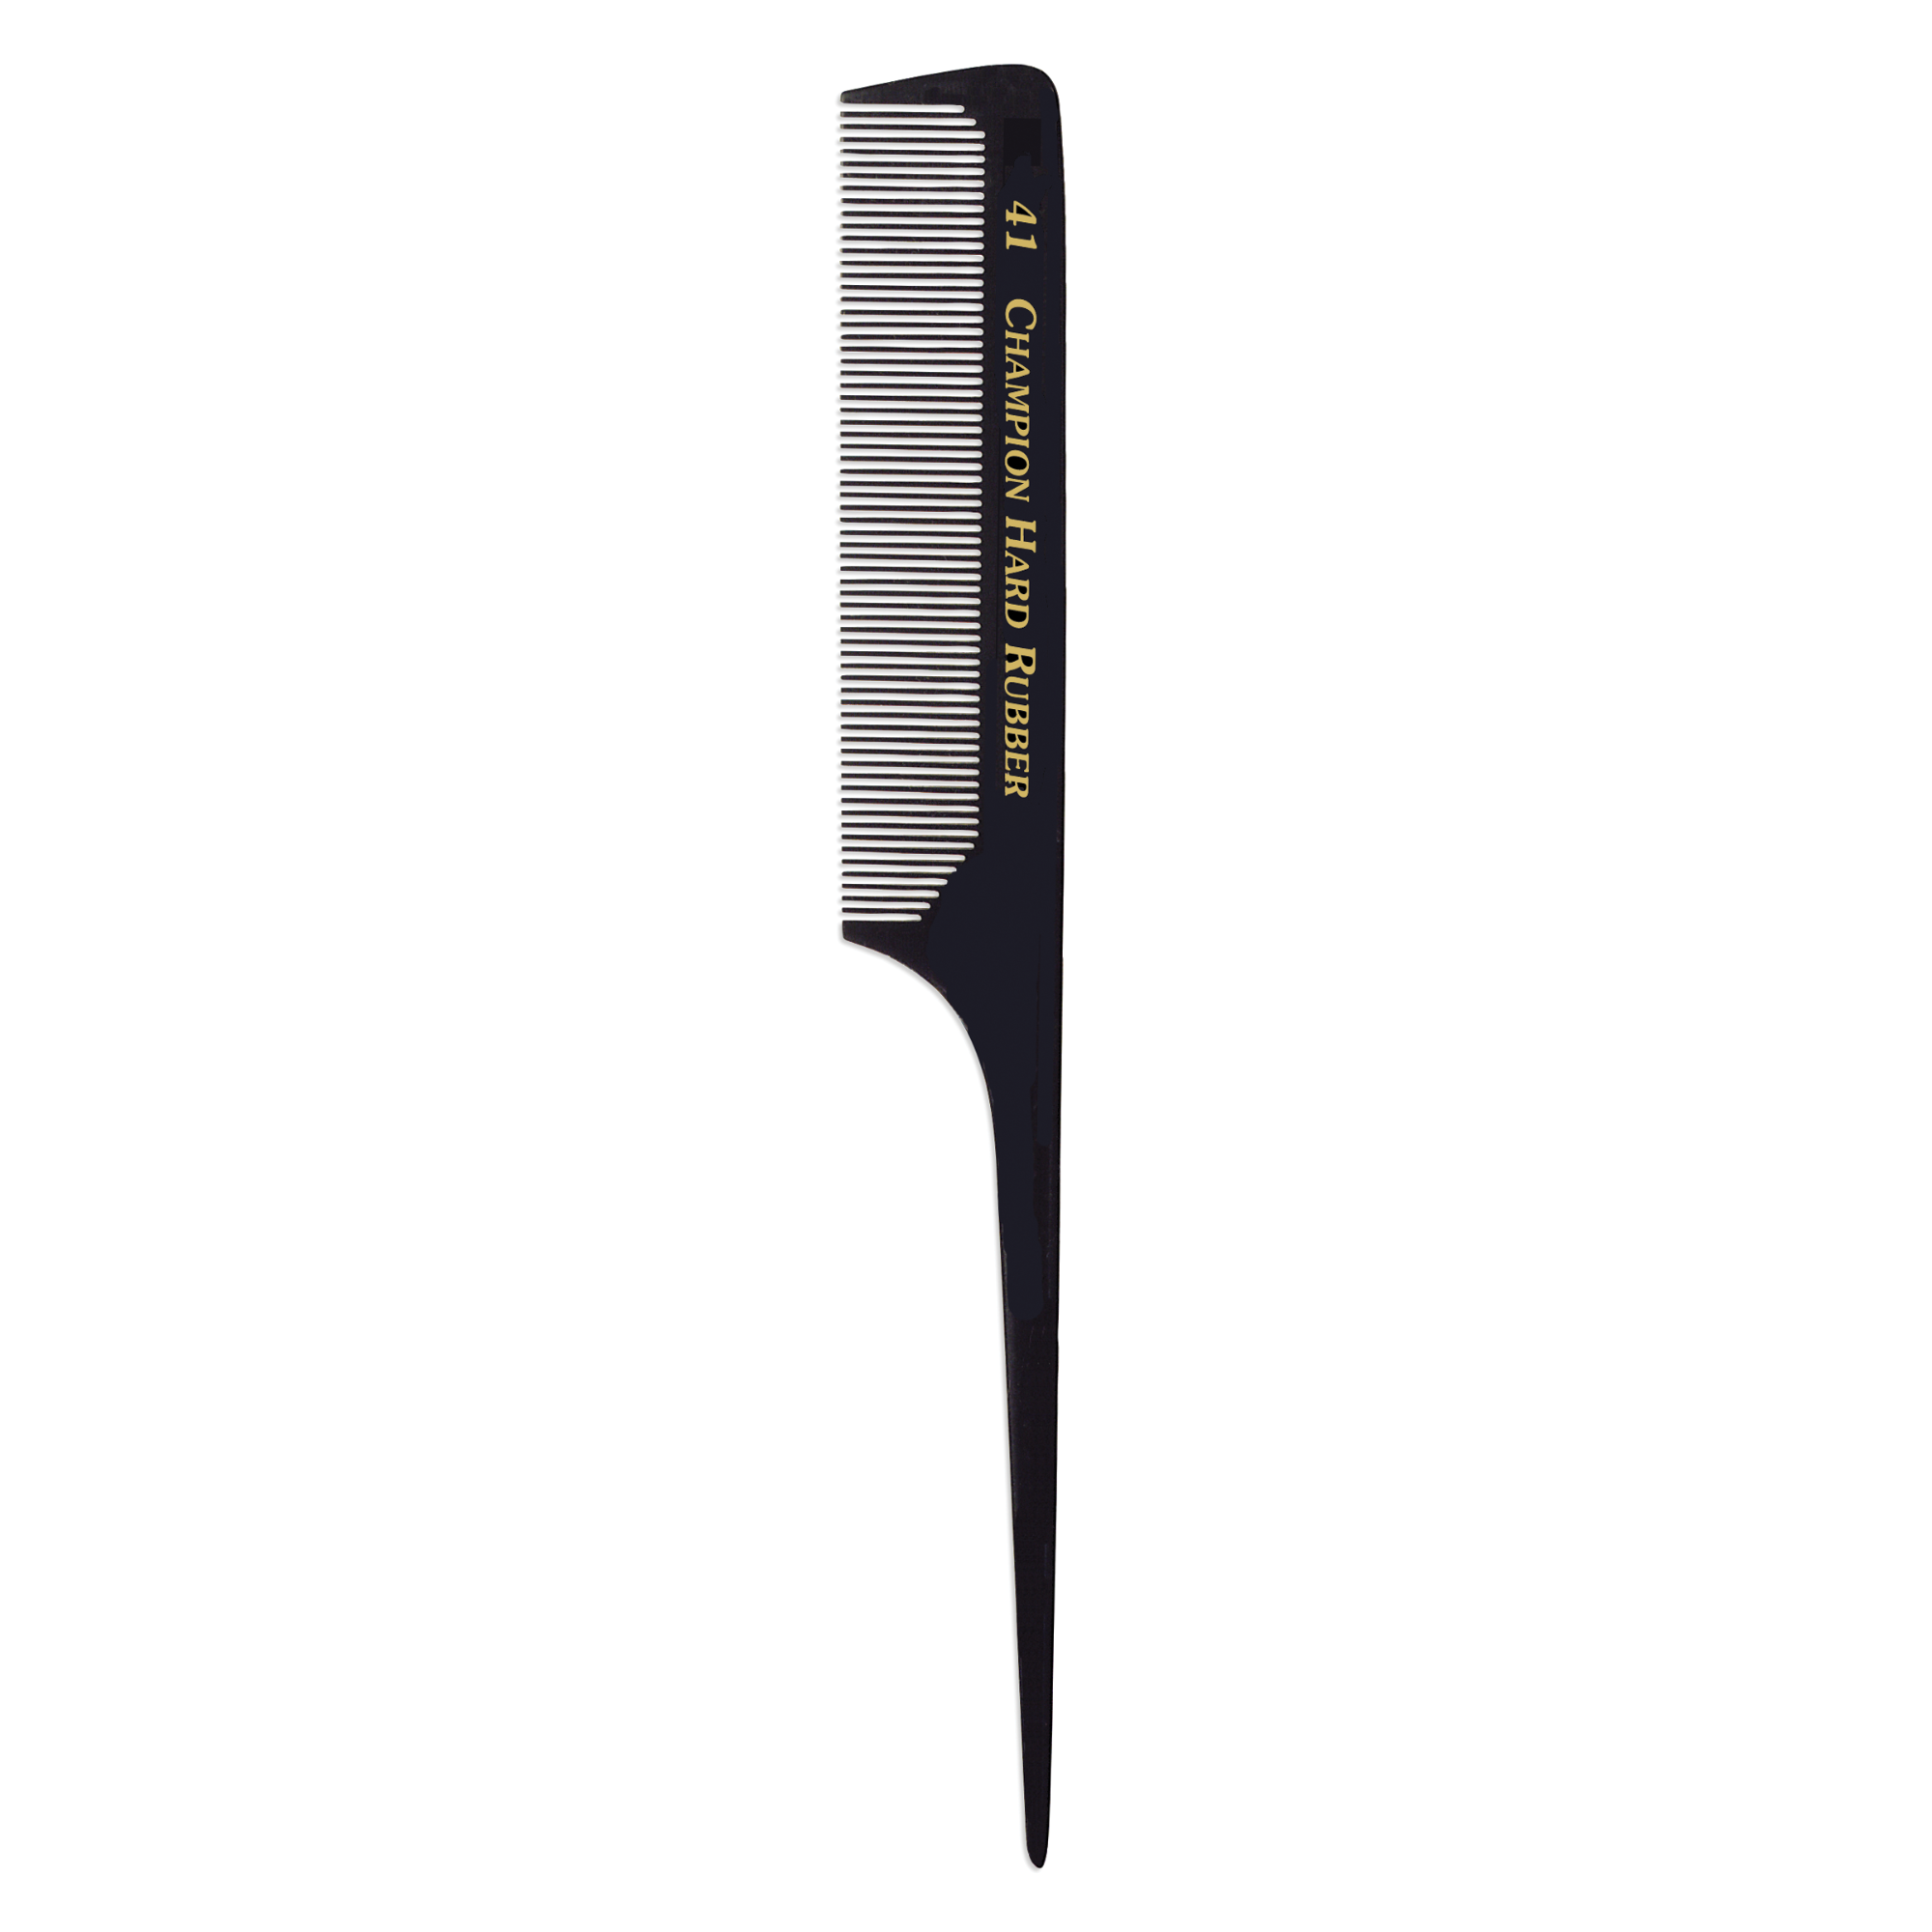 Hard Rubber Rat Tail Comb, Medium/Coarse Teeth - 8"